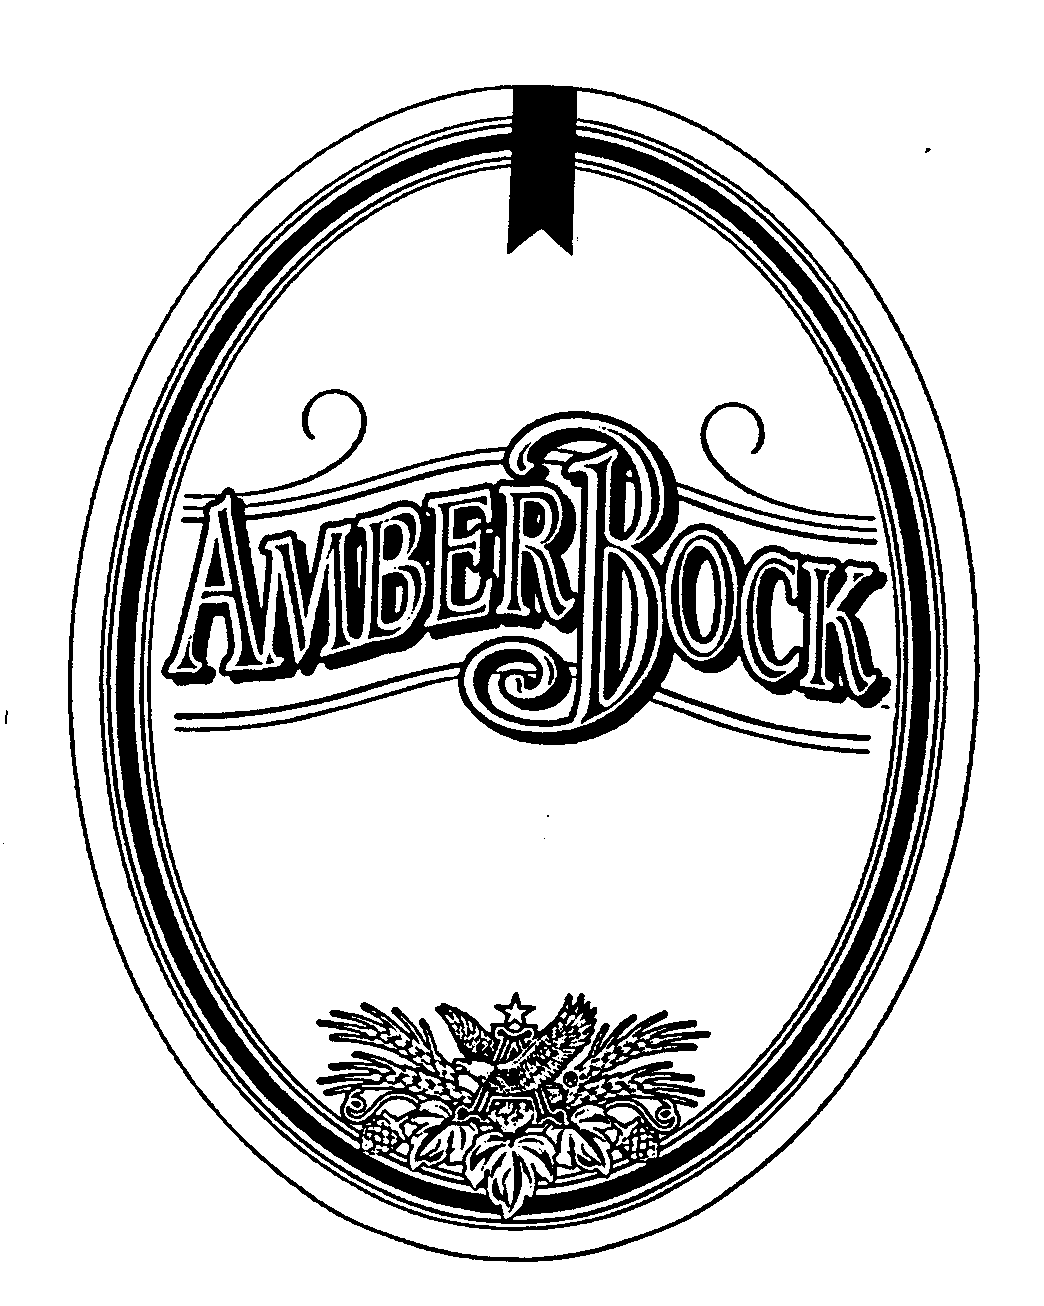  AMBERBOCK